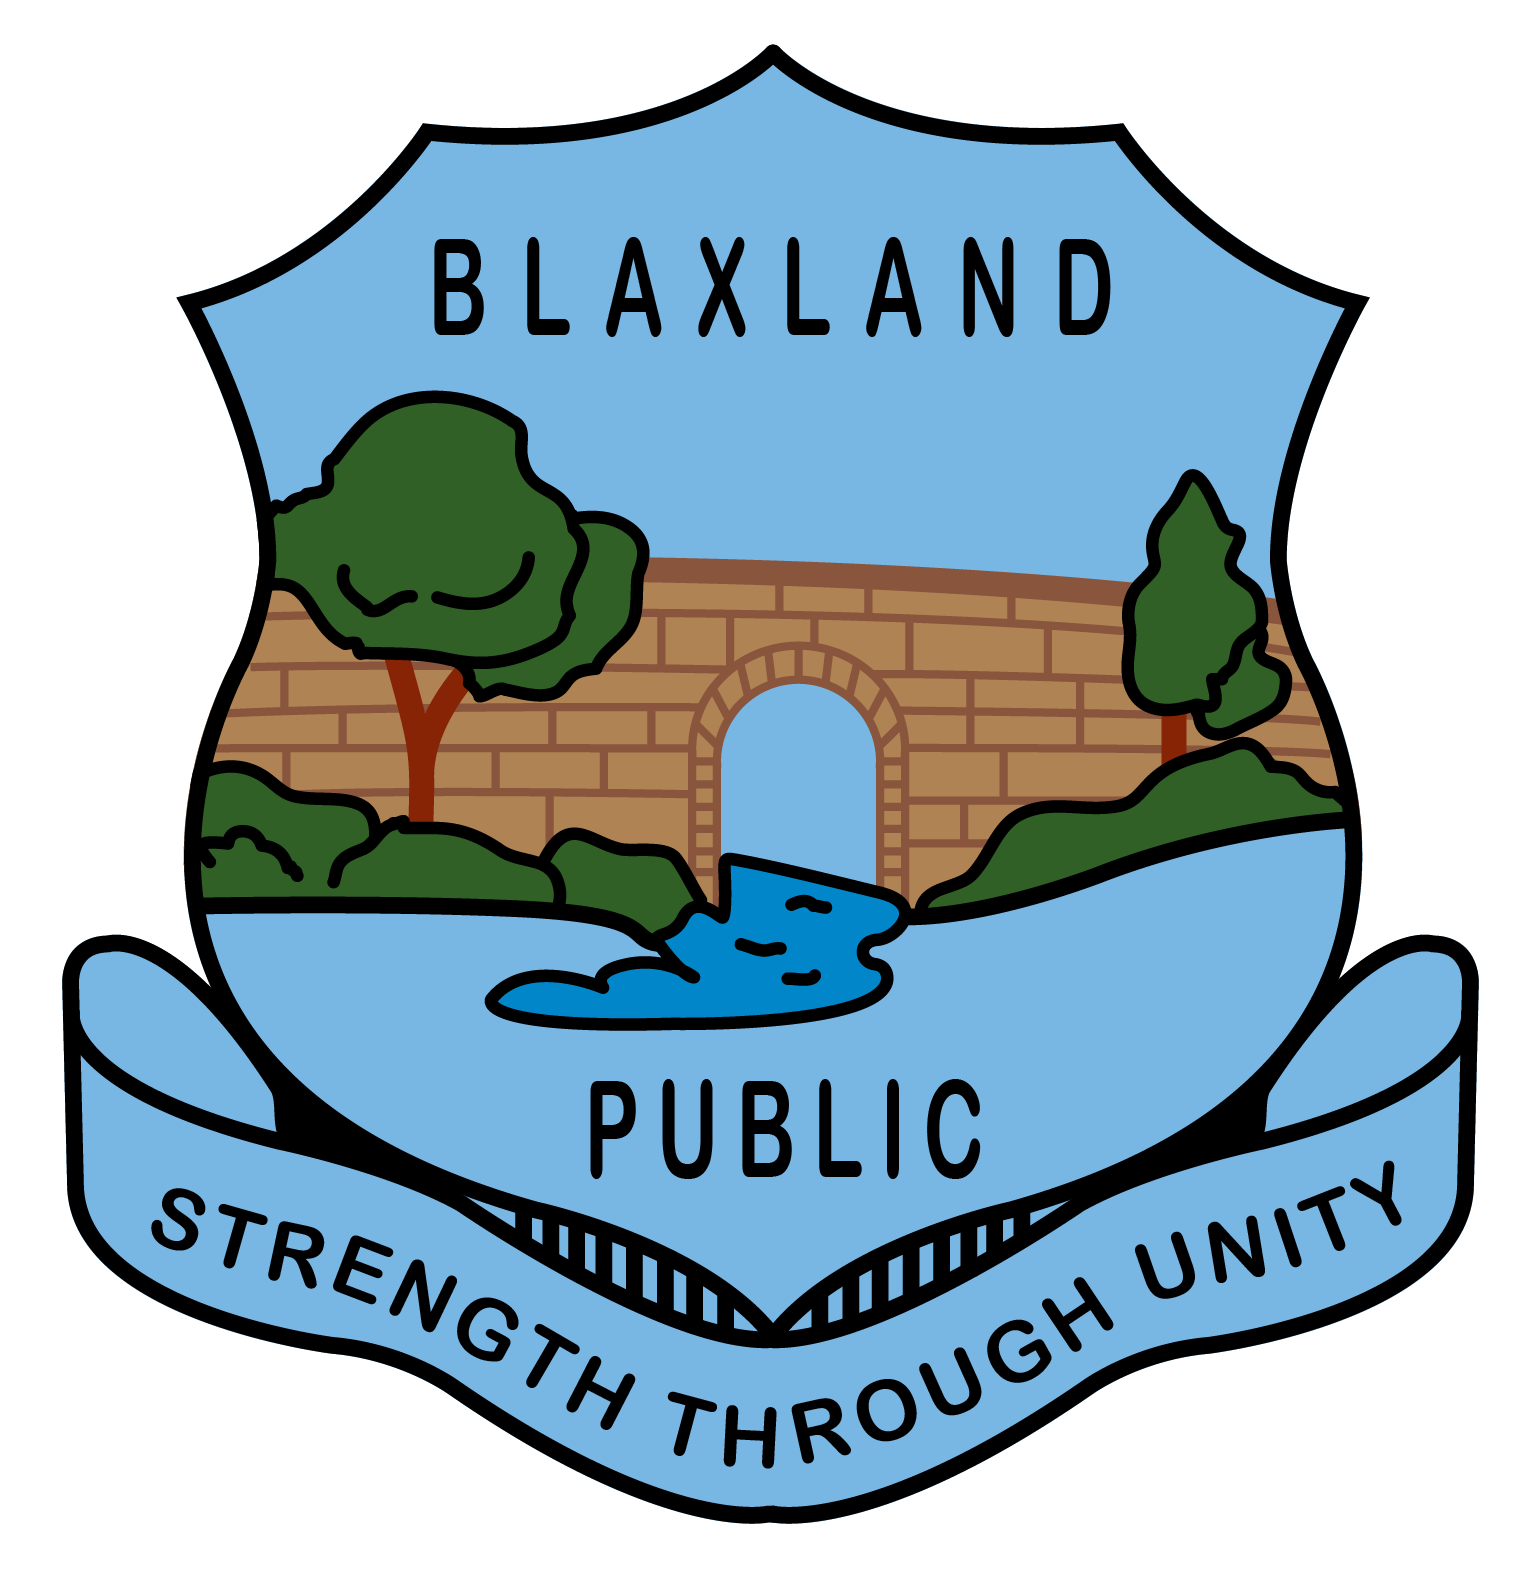 Blaxland Public School Portal and Dads Group